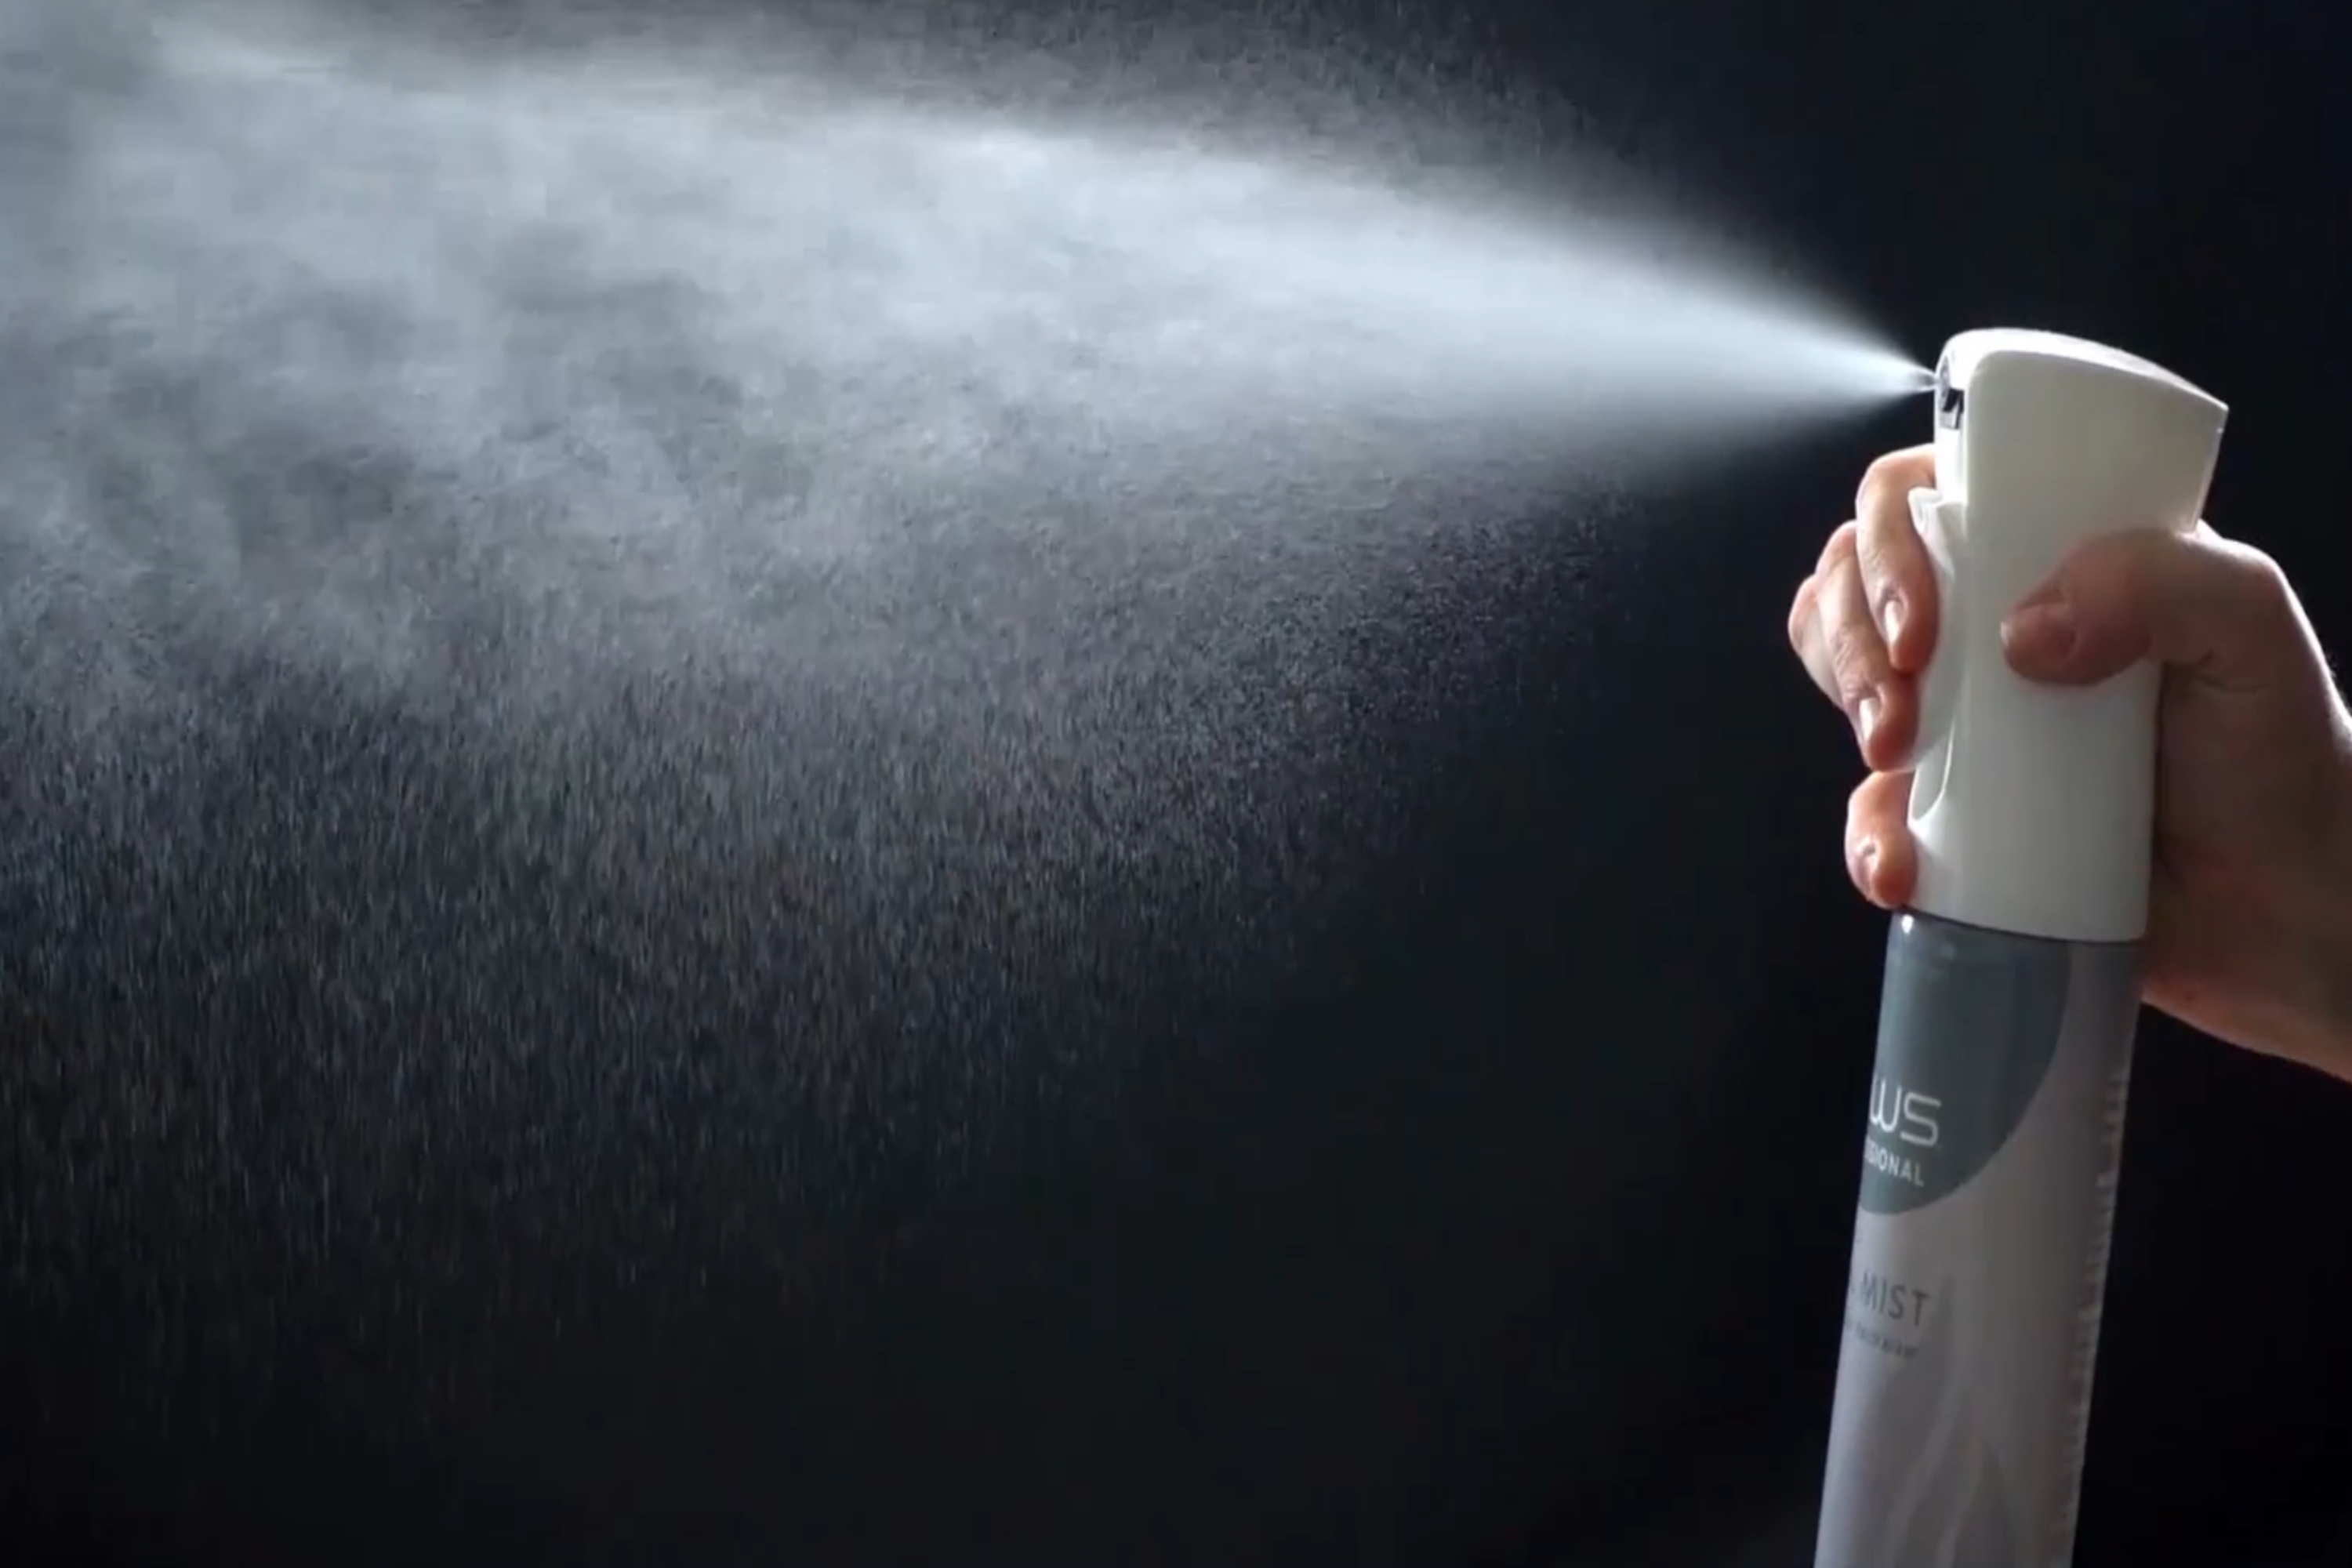 Ultra Mist Odor Control